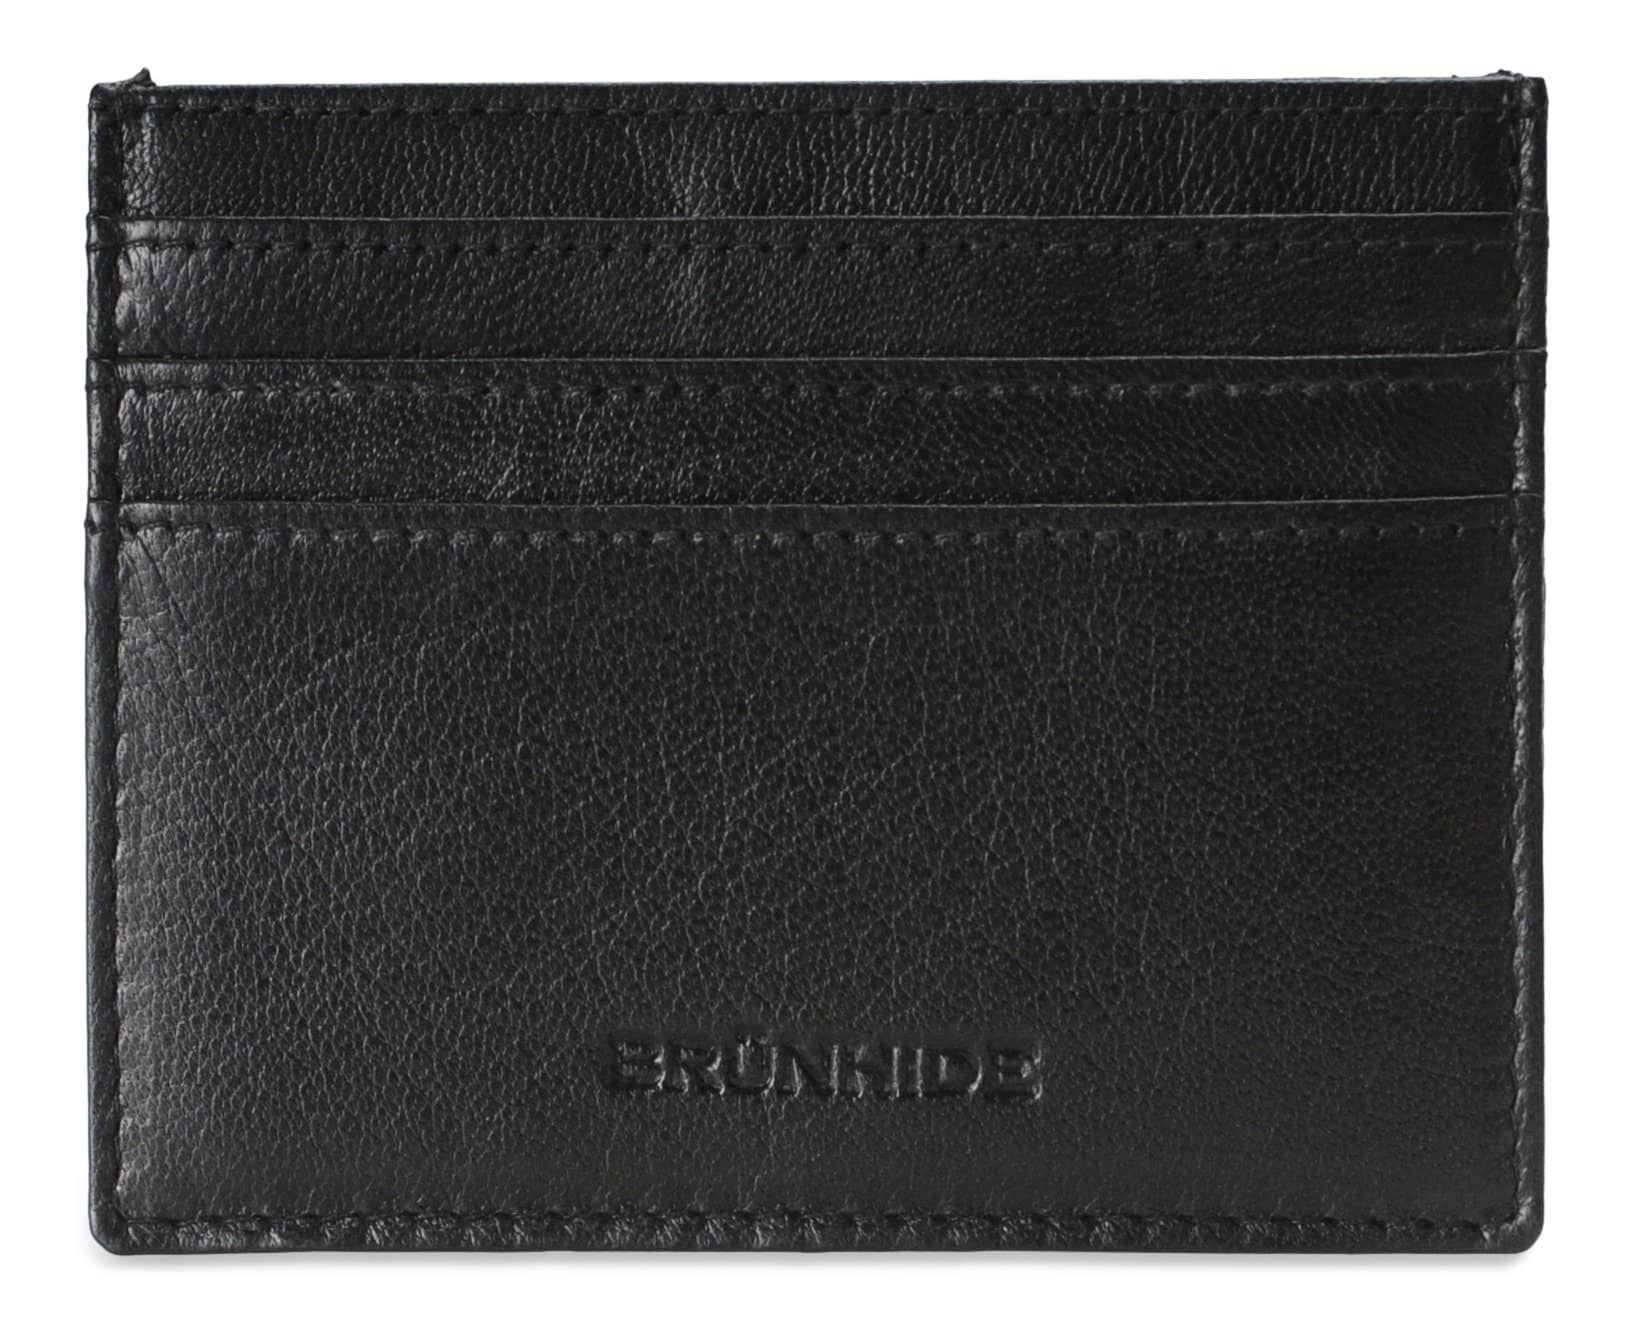 Mens Brunhide leather card holder wallet with plastic ID 254-300 Black front